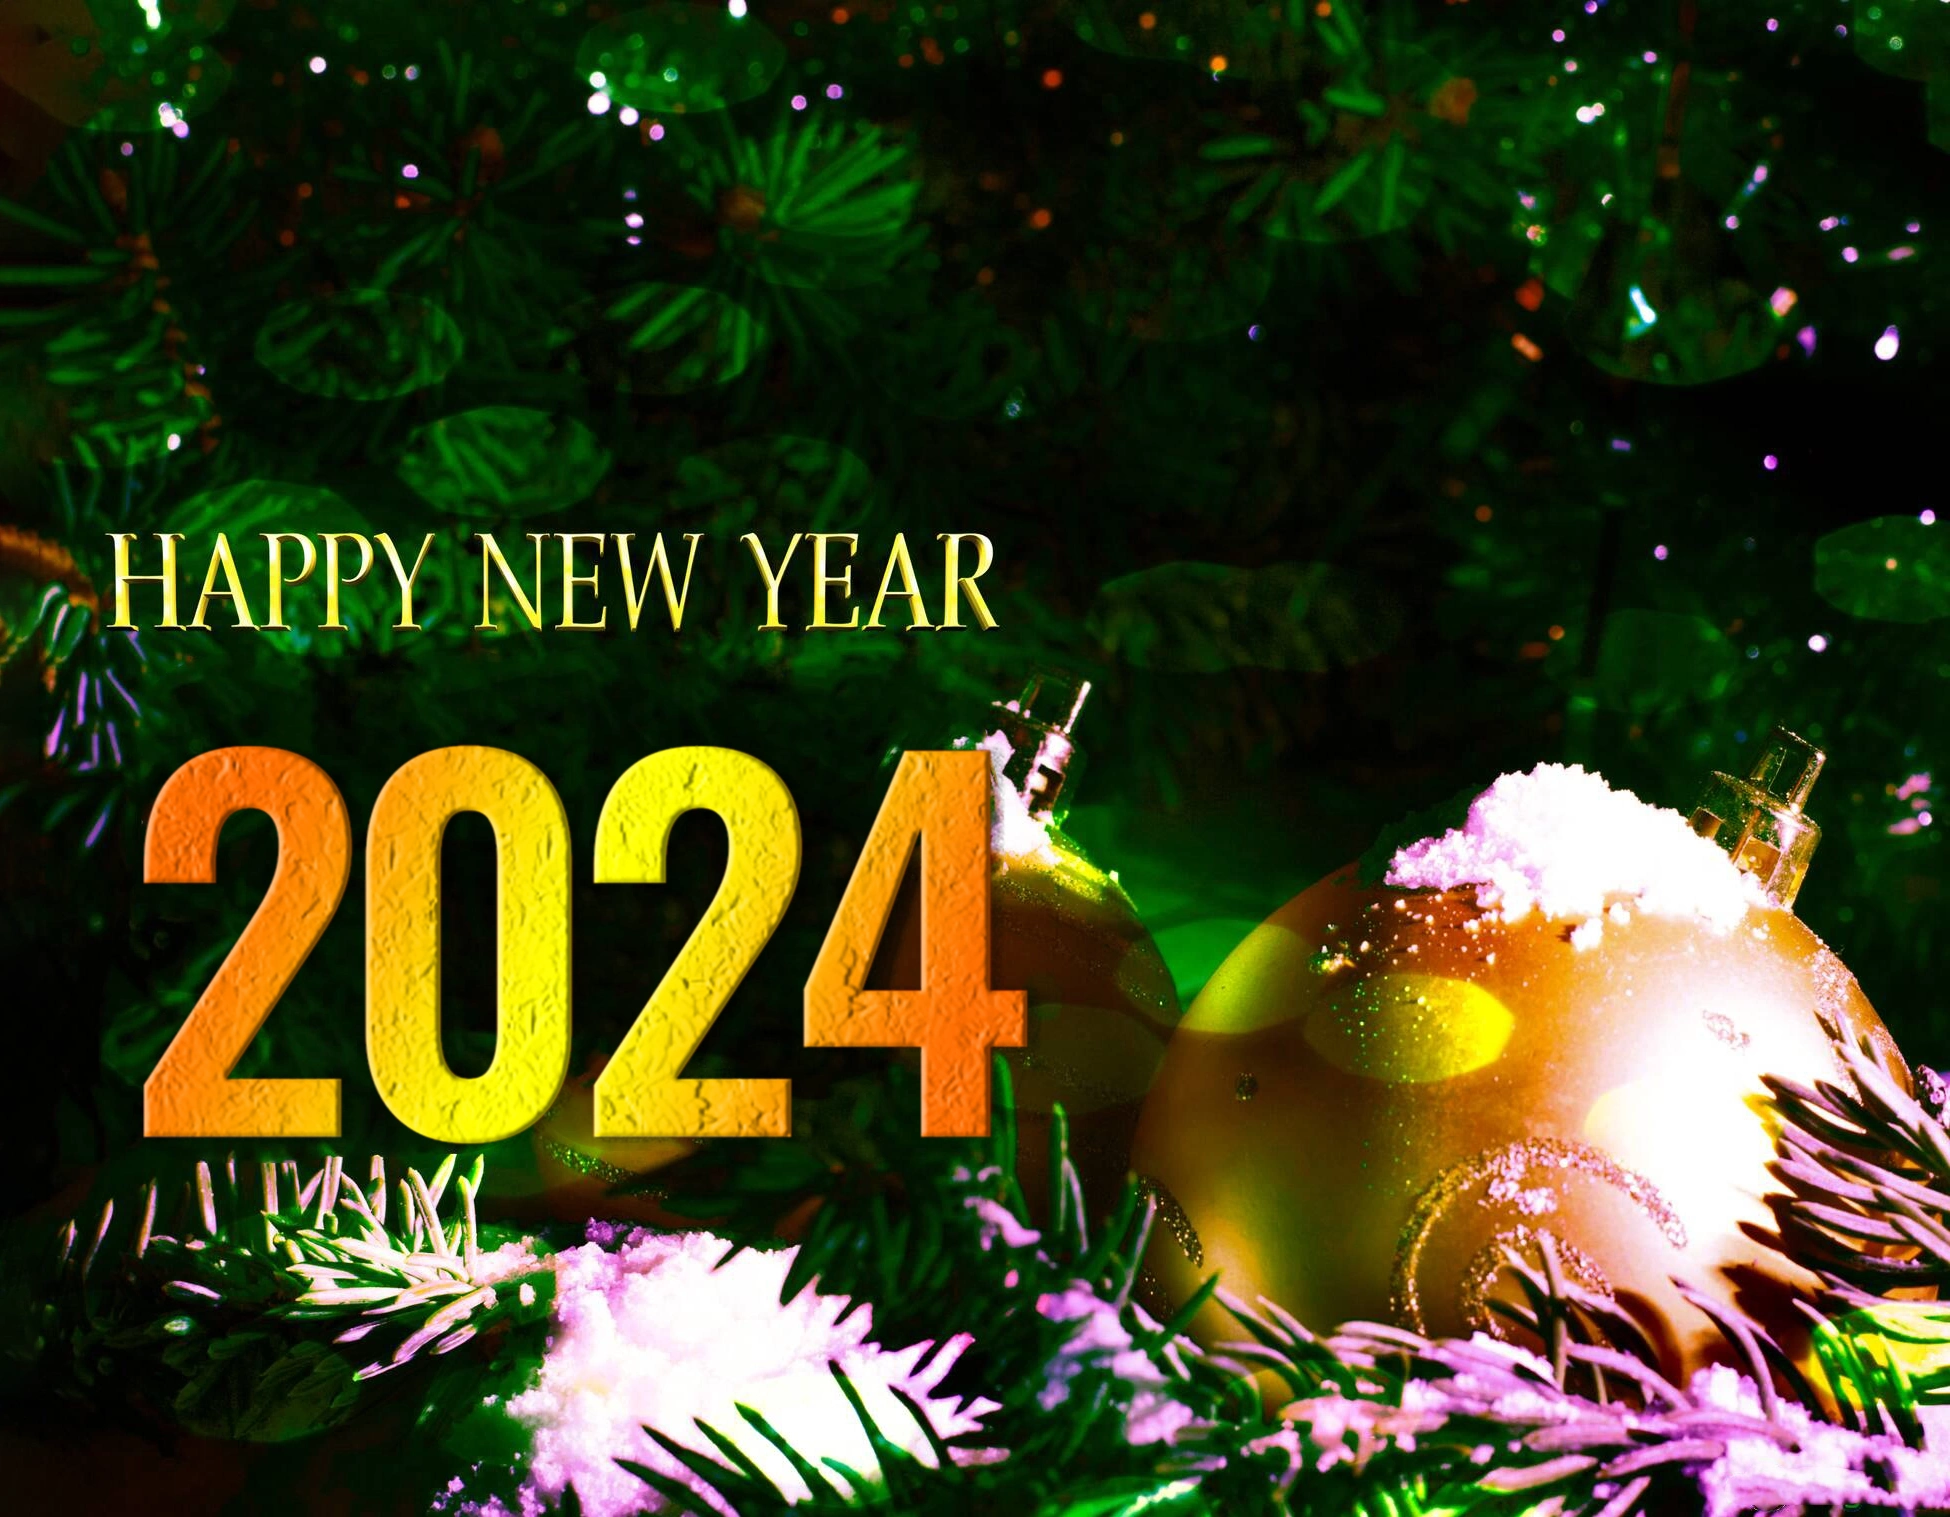 Electronic Christmas card for free happy new year 2024 image from torange_biz free photobank